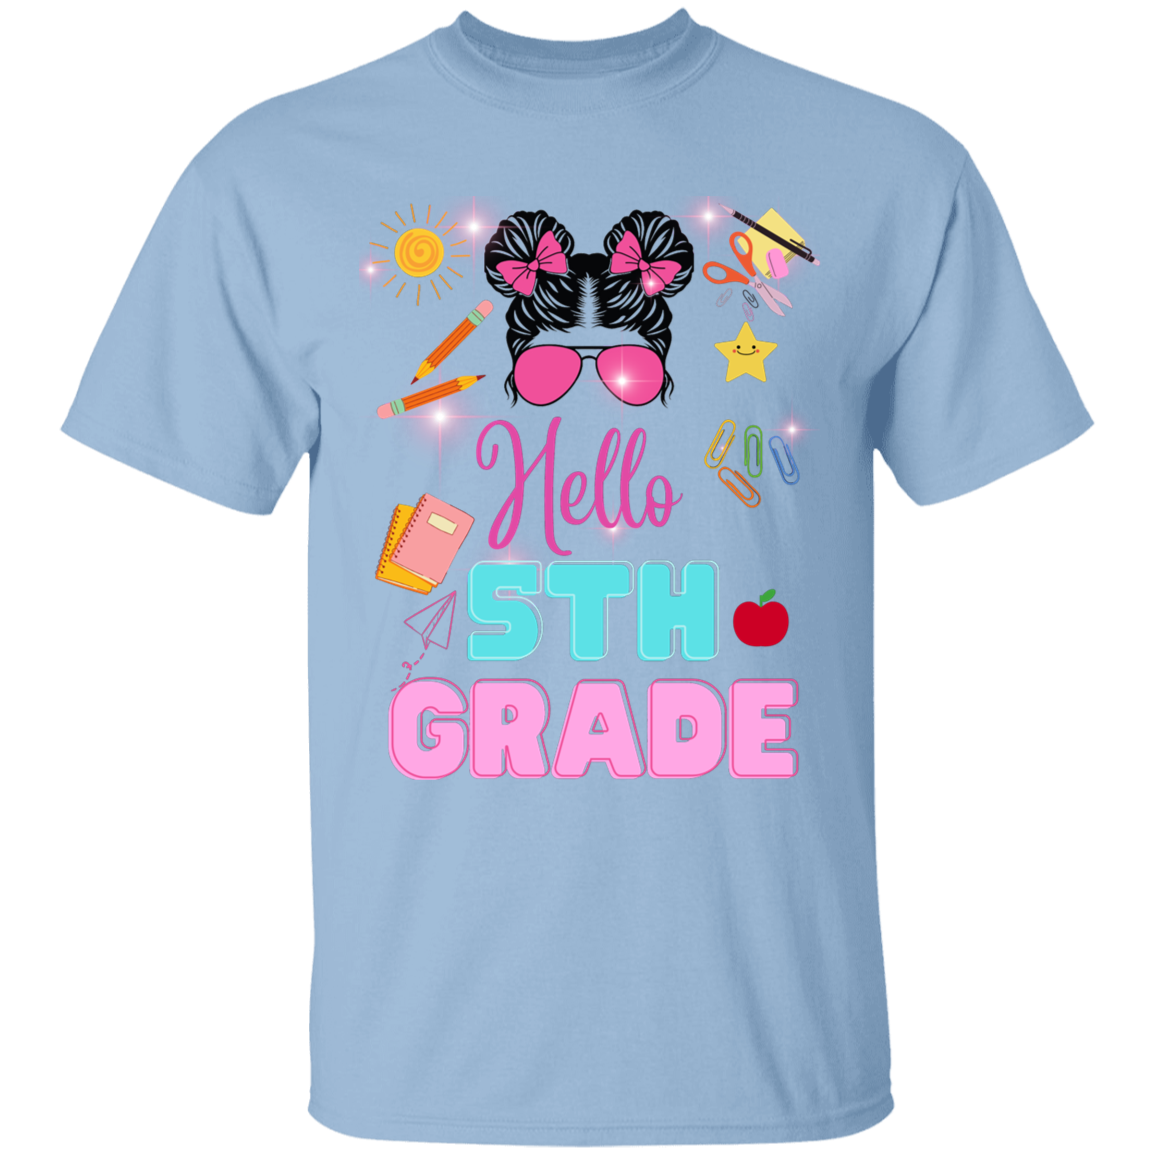 Kids back-to-school t-shirts.  Back-to-school clothing .Trendy back-to-school tees ,Cute back-to-school shirts.